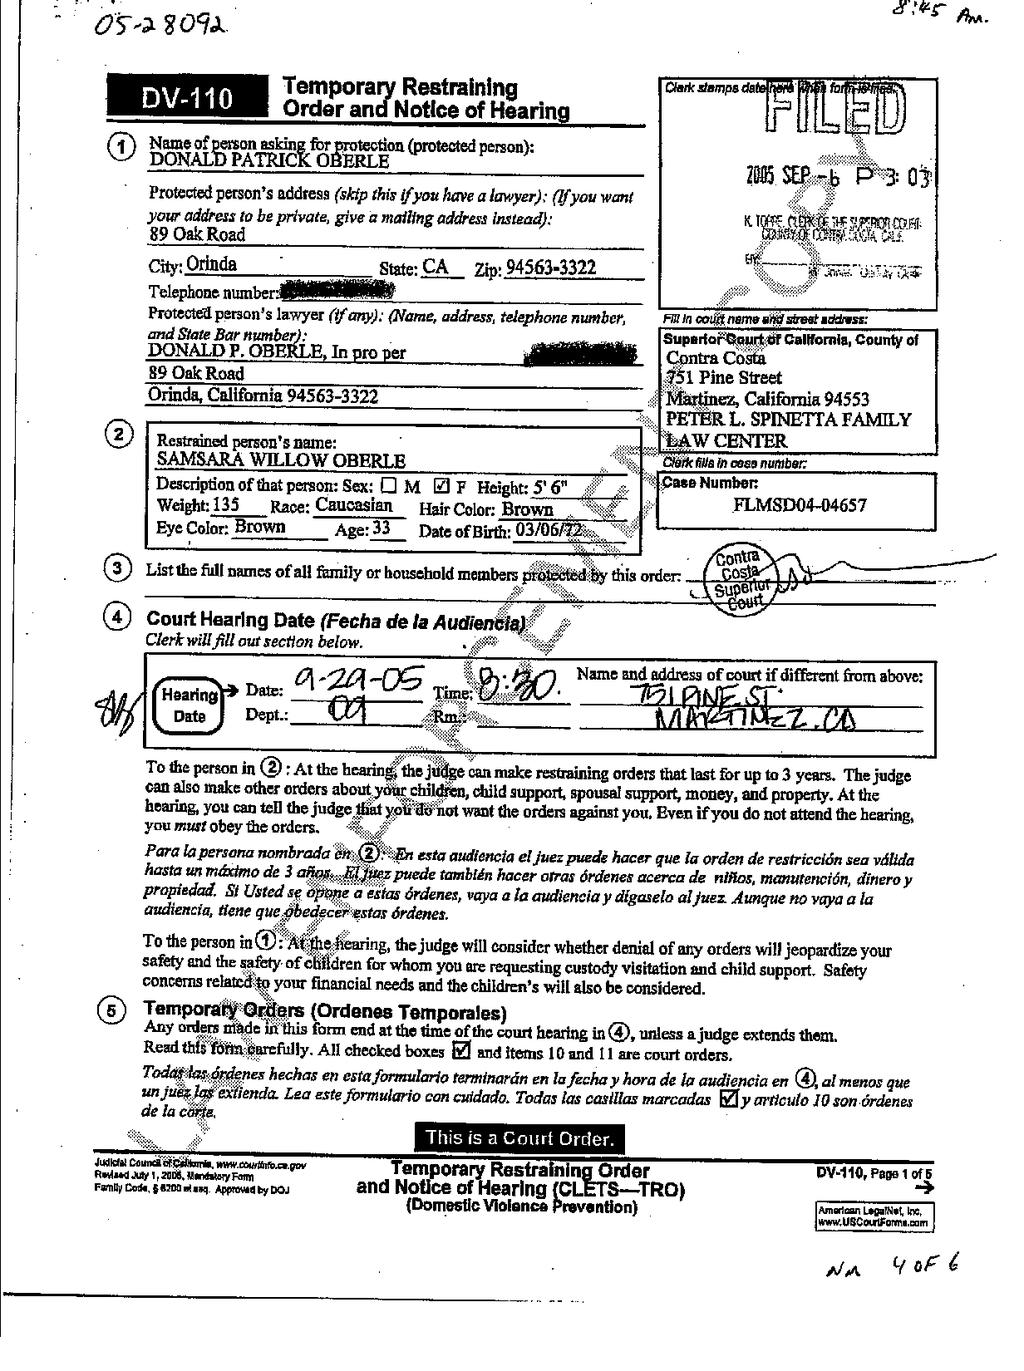 Case 3:07-cv-04337-WHA Document